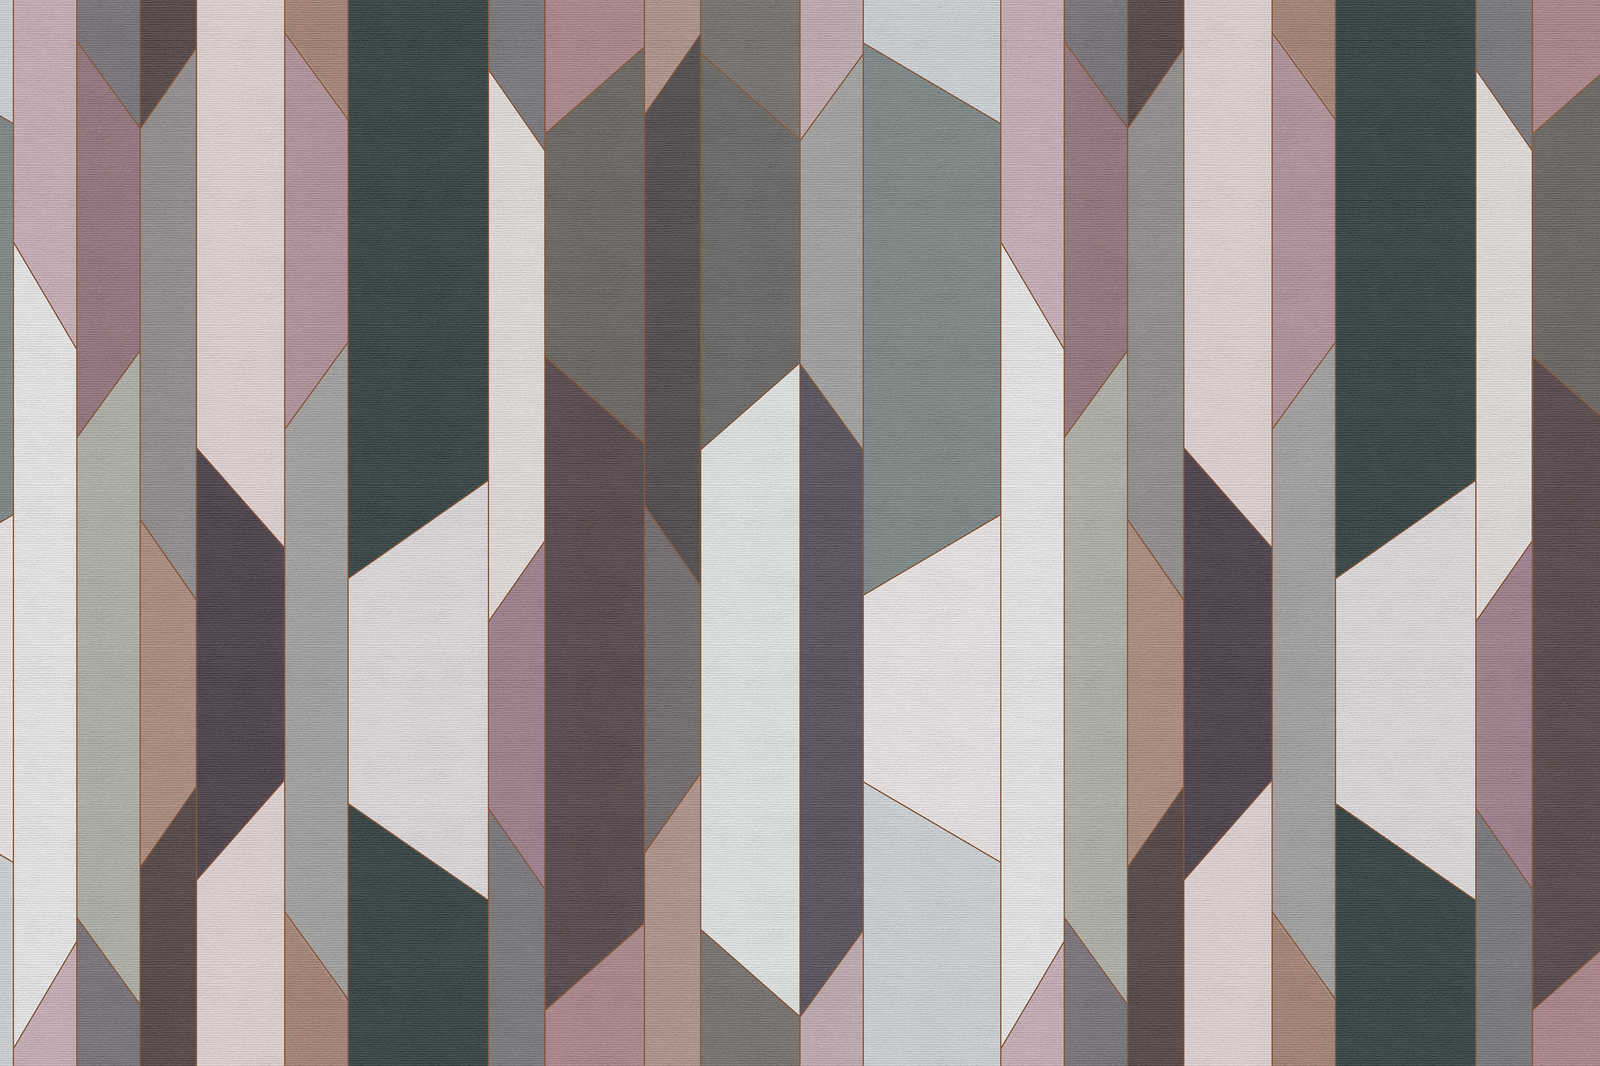             Fold 2 - Canvas painting with geometric retro pattern - 0.90 m x 0.60 m
        